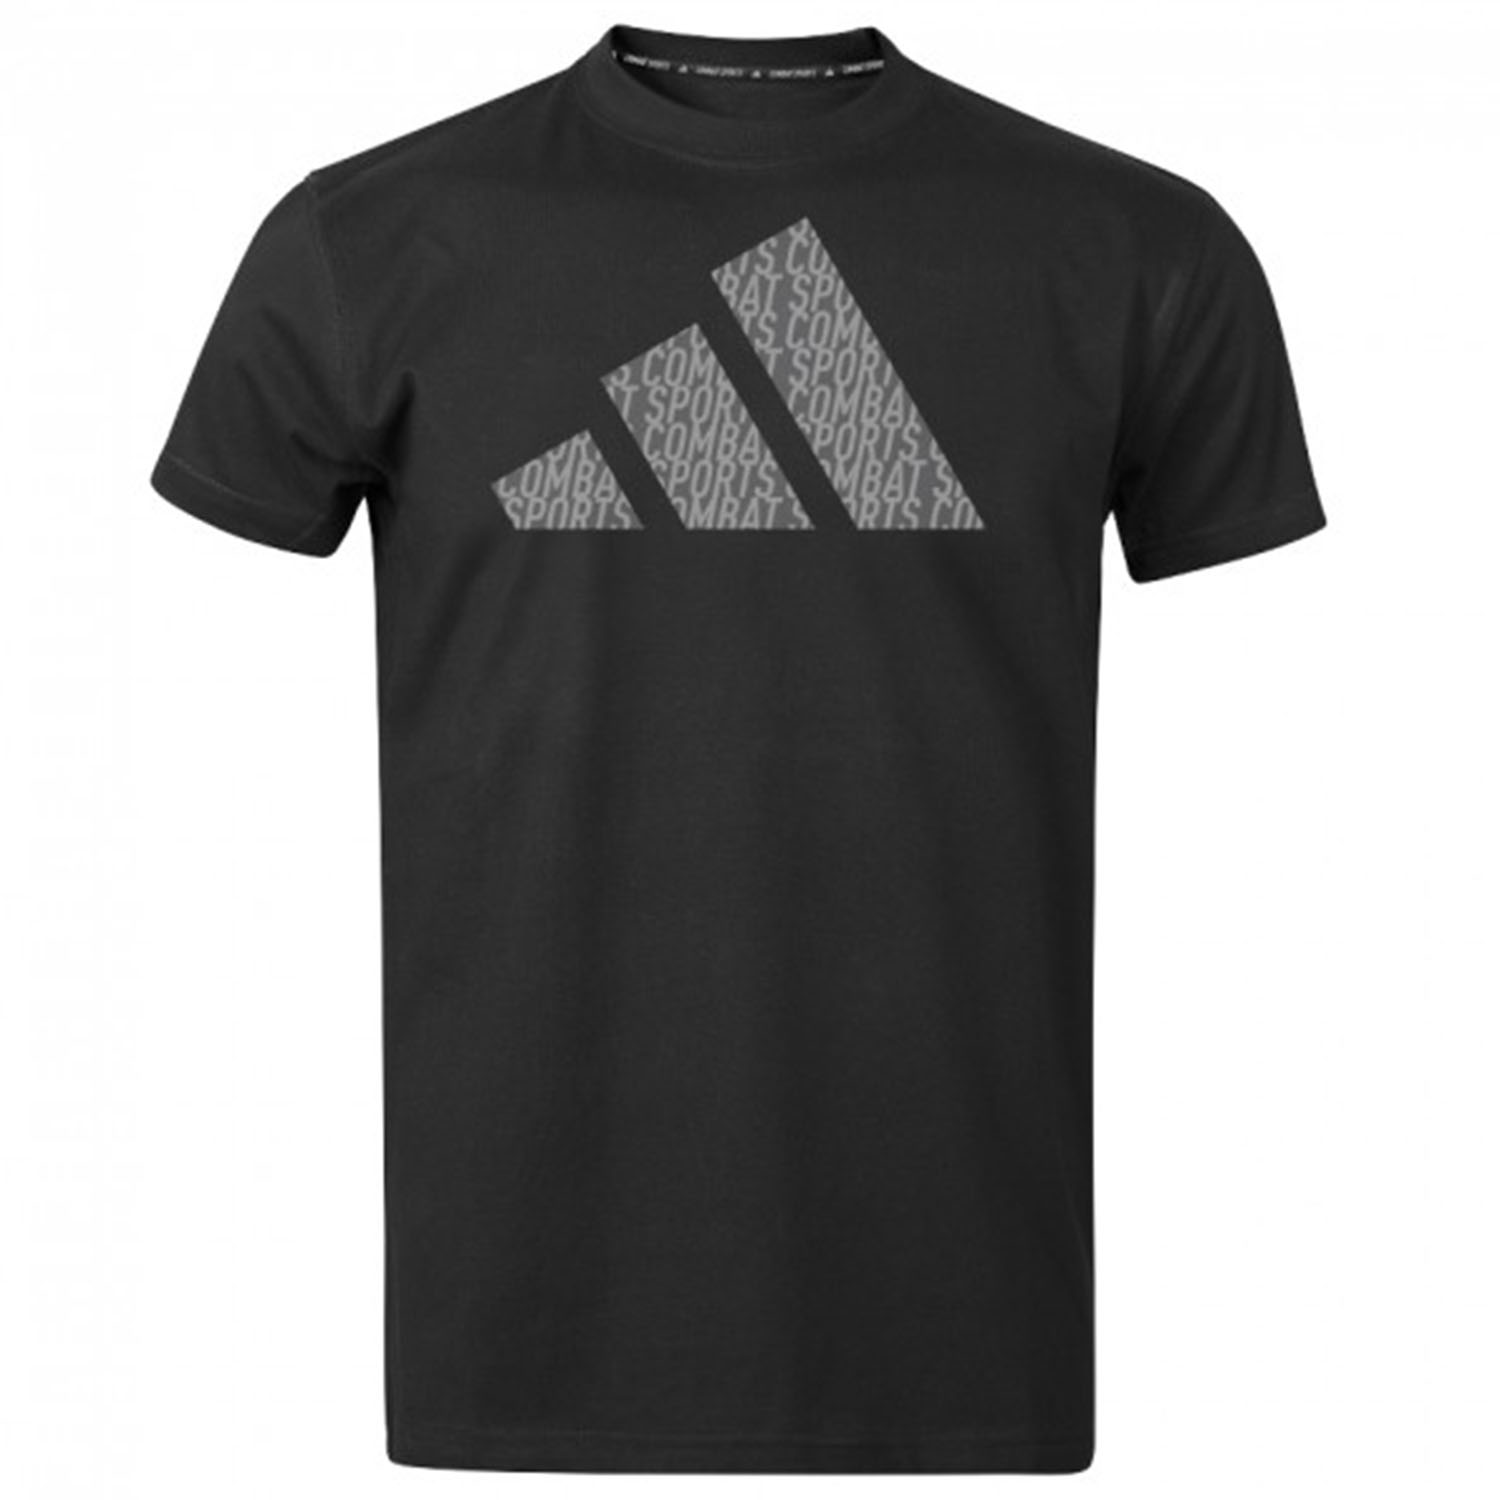 adidas T-Shirt, Perfo Script Graphic Combat Sports, schwarz